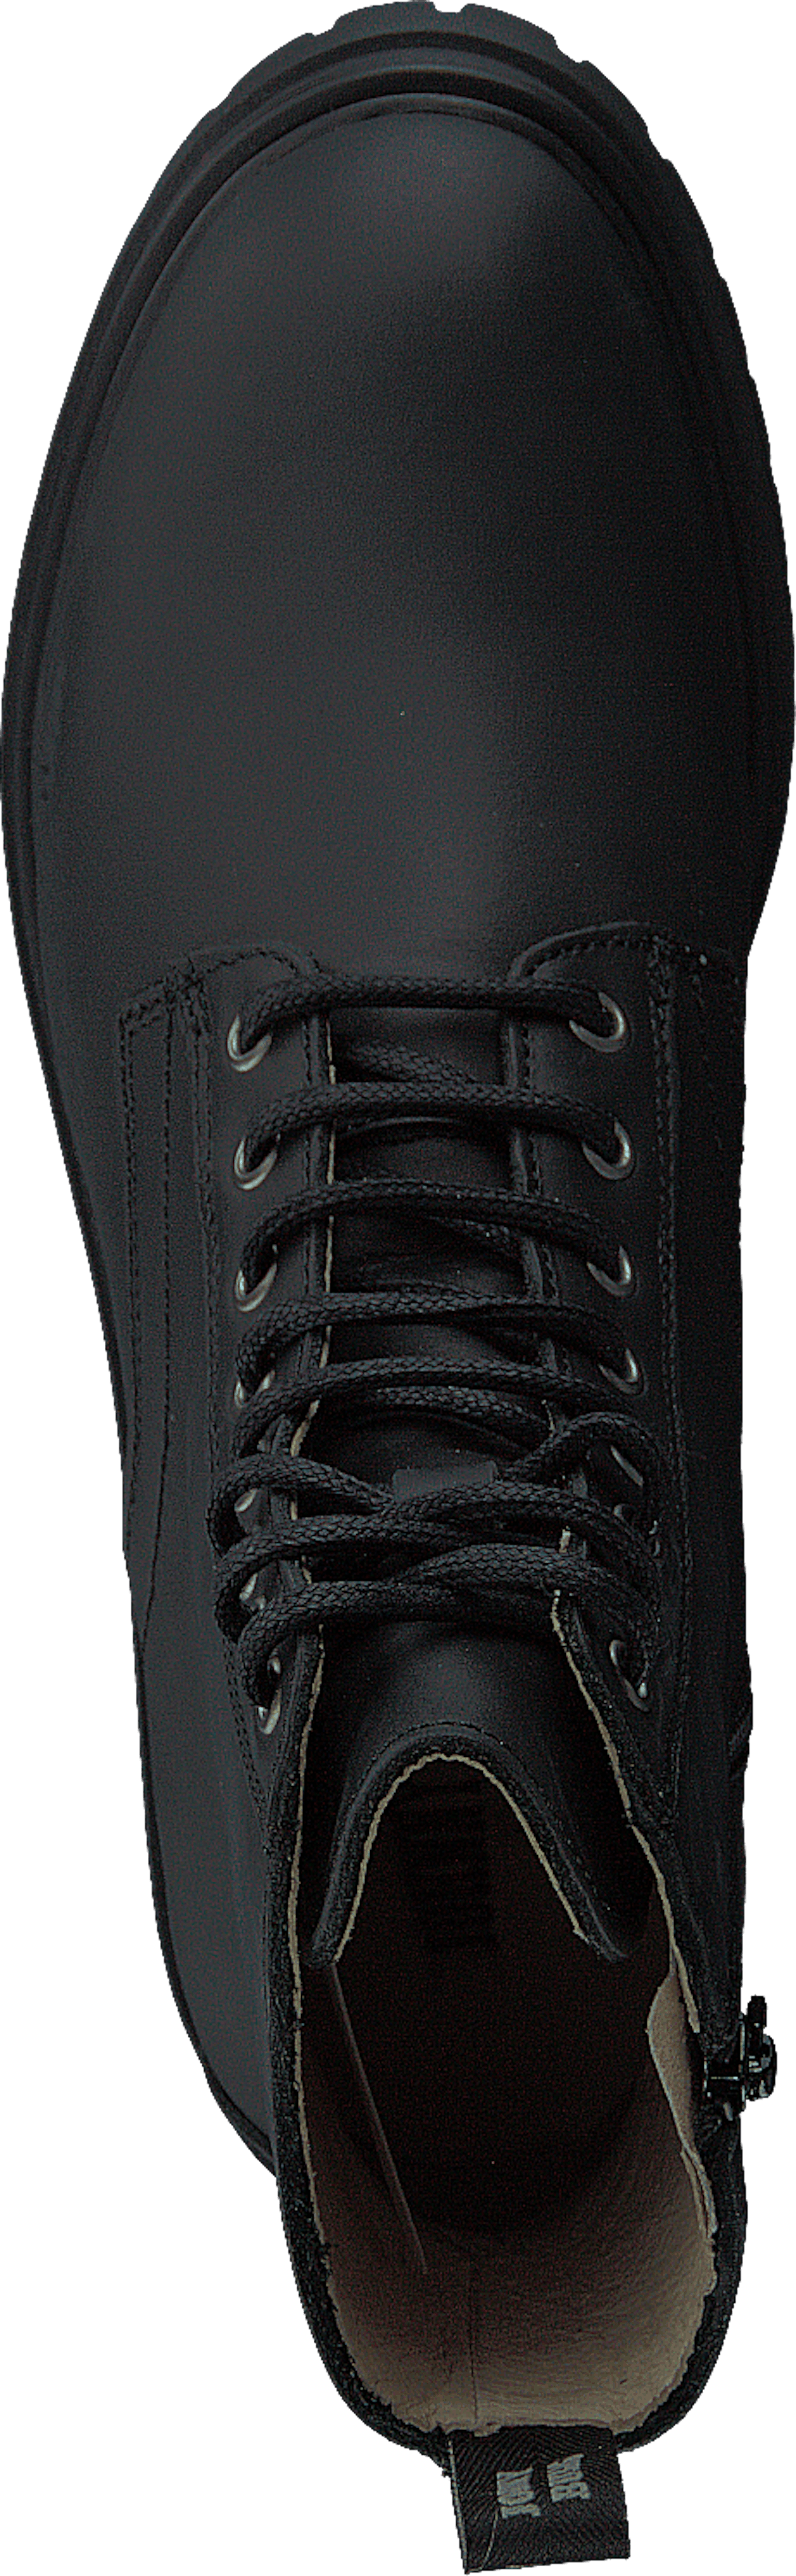 952 Sp Black - Oiled Leather Black